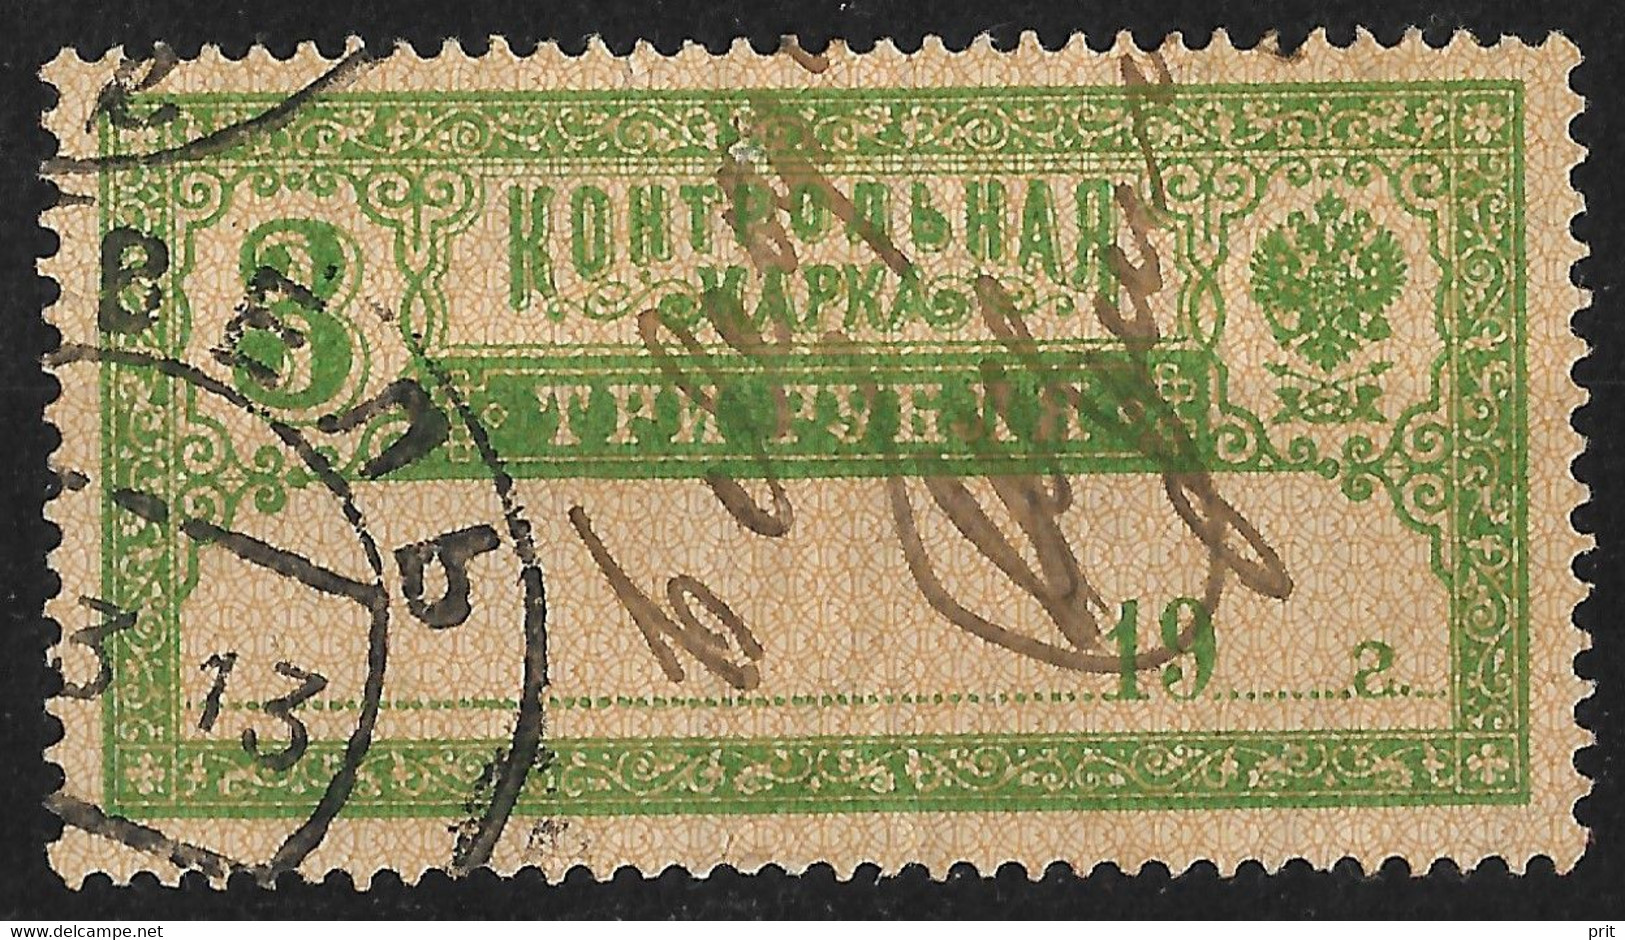 Russia 1900 3Rub Postal Savings Receipt/Revenue. Used In Reval/Ревель Tallinn In 1913. J.Barefoot Cat 19/Michel 133. - Fiscali